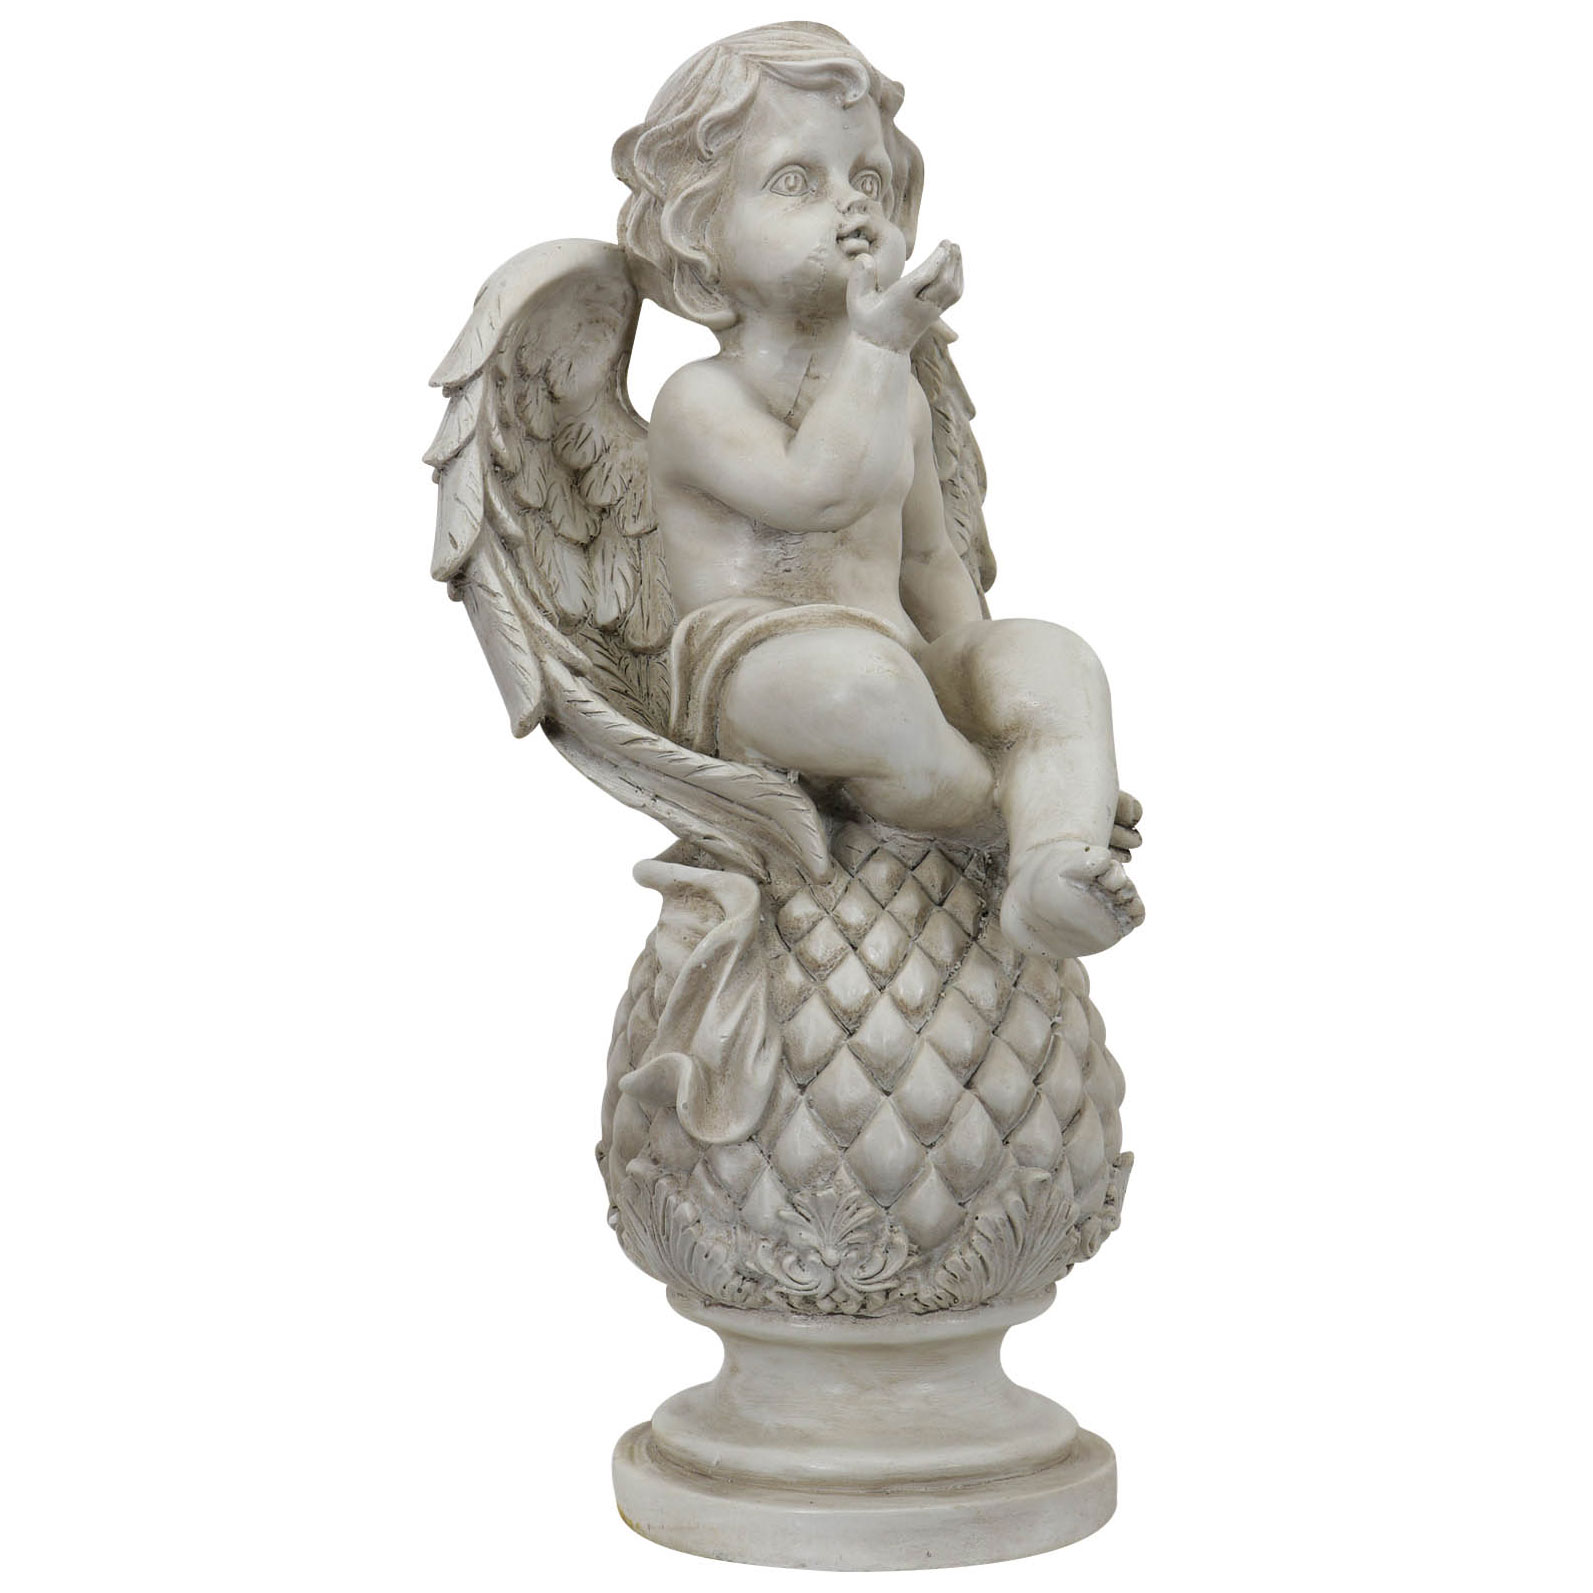 Sitzender Engel Putte Engelsfigur Kerzenhalter Kerze Kugel Antik-Stil 30cm b 